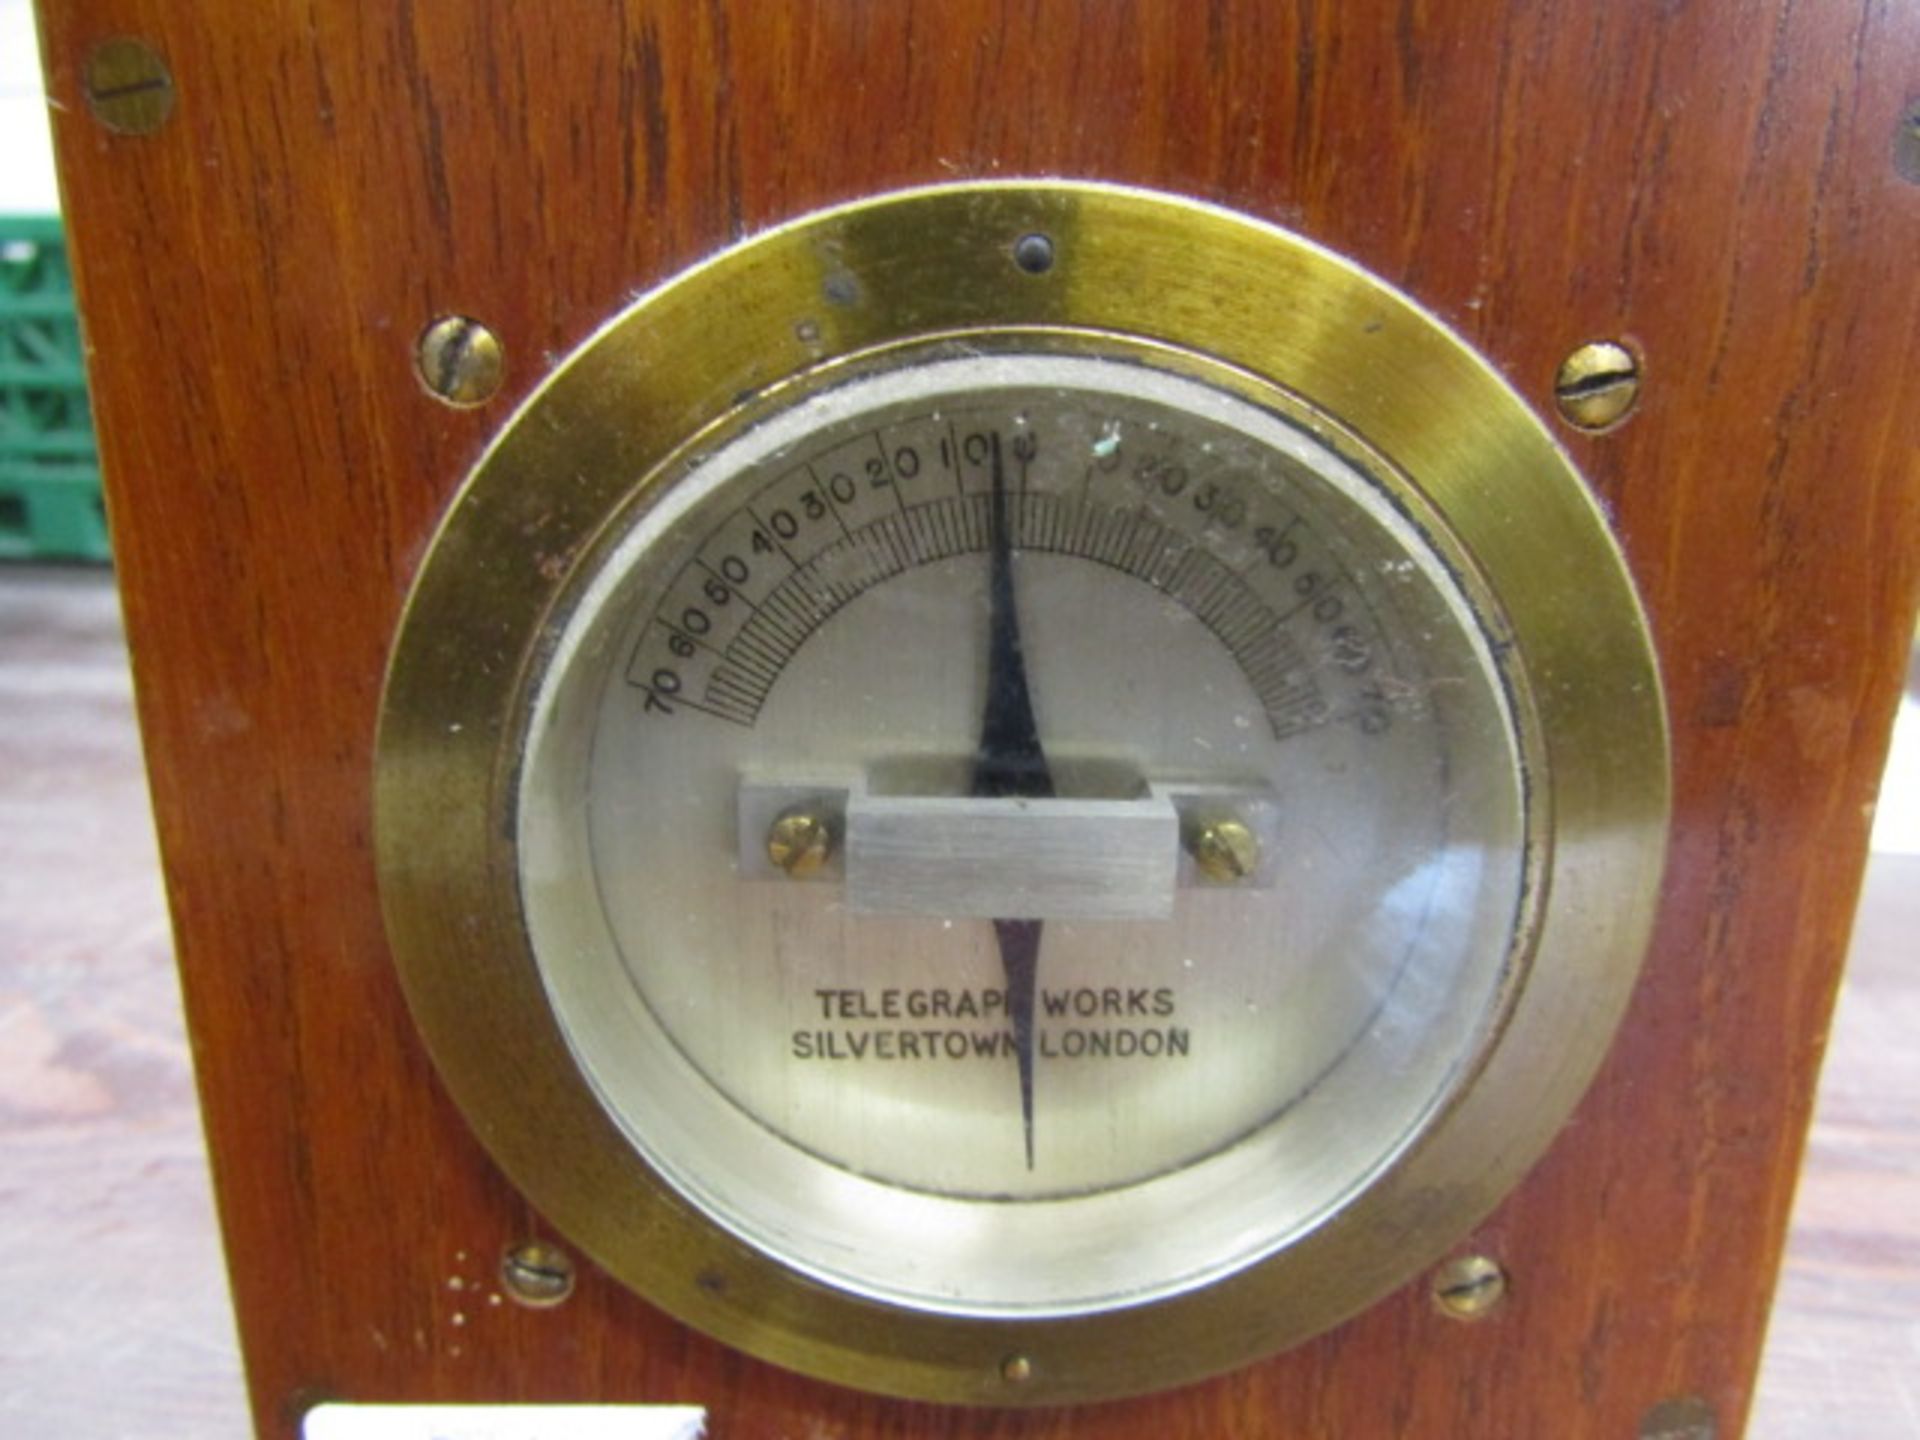 Telegraph works galvanometer - Image 2 of 4